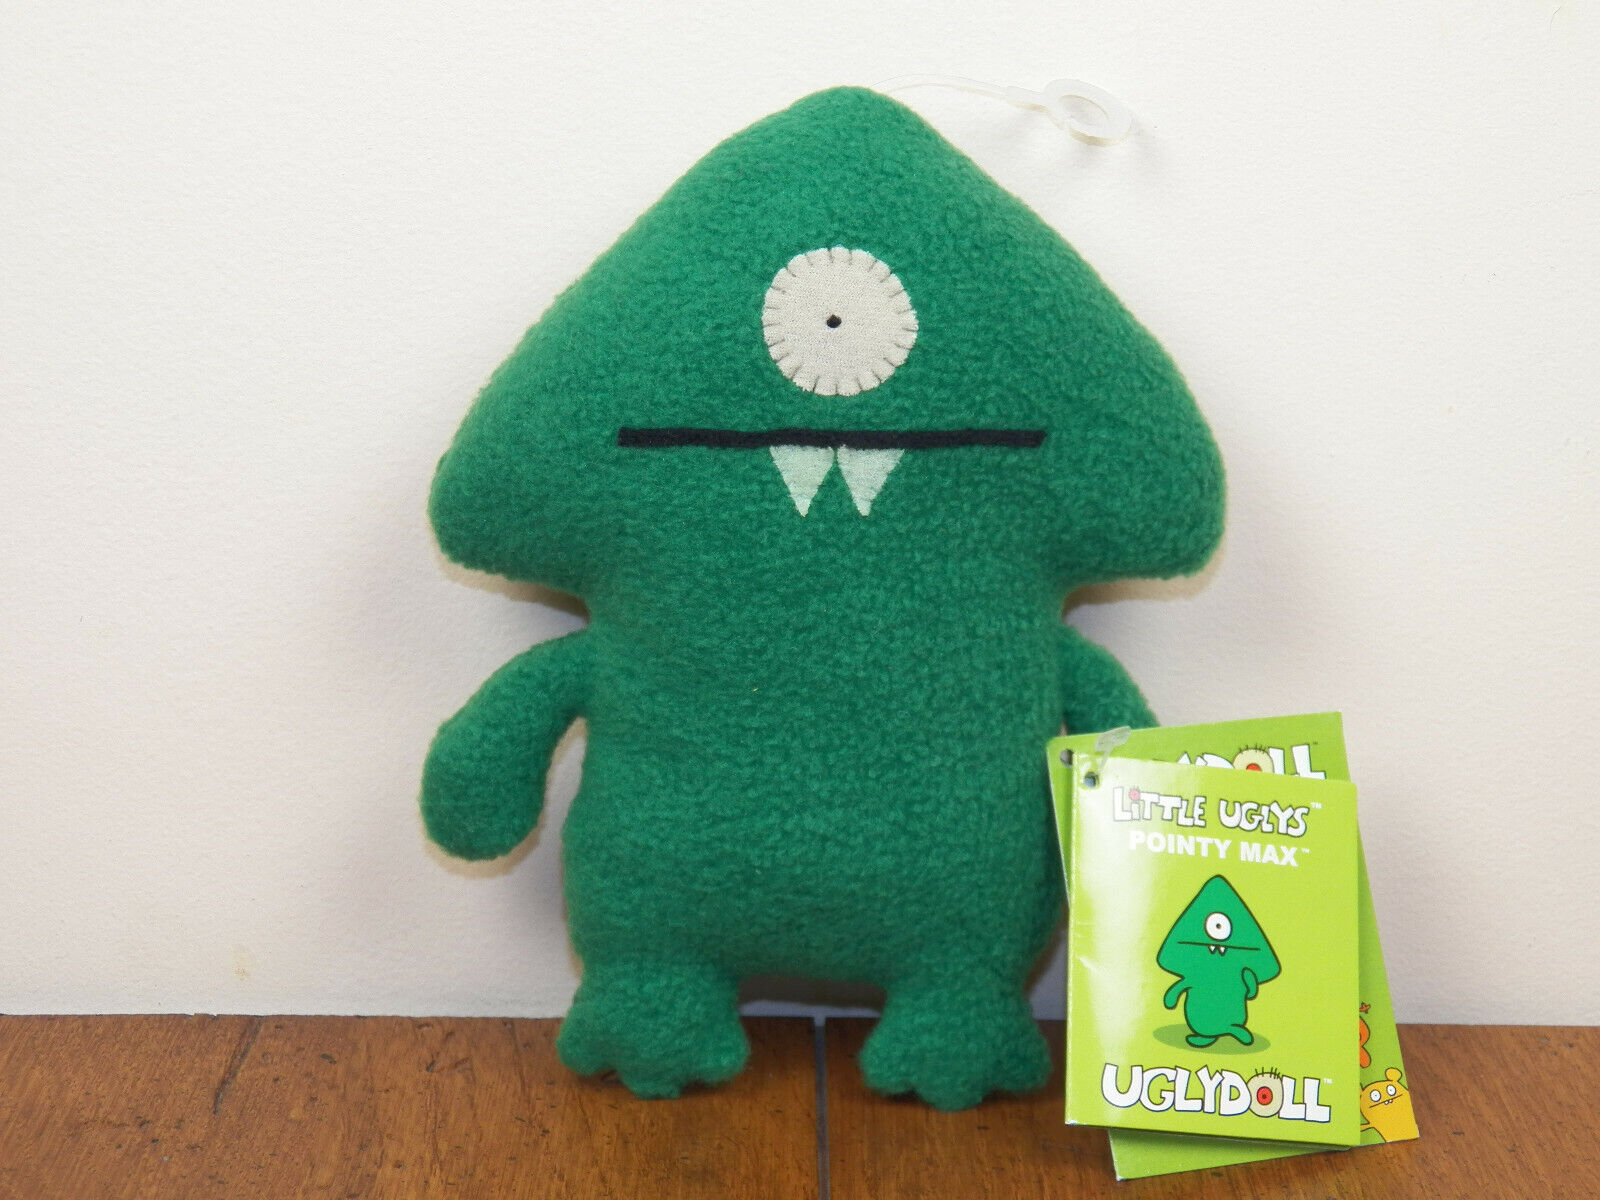 Uglydolls Pointy Max 7" Little Uglys Plush Stuffed Green Doll Toy *new W/ Tags*